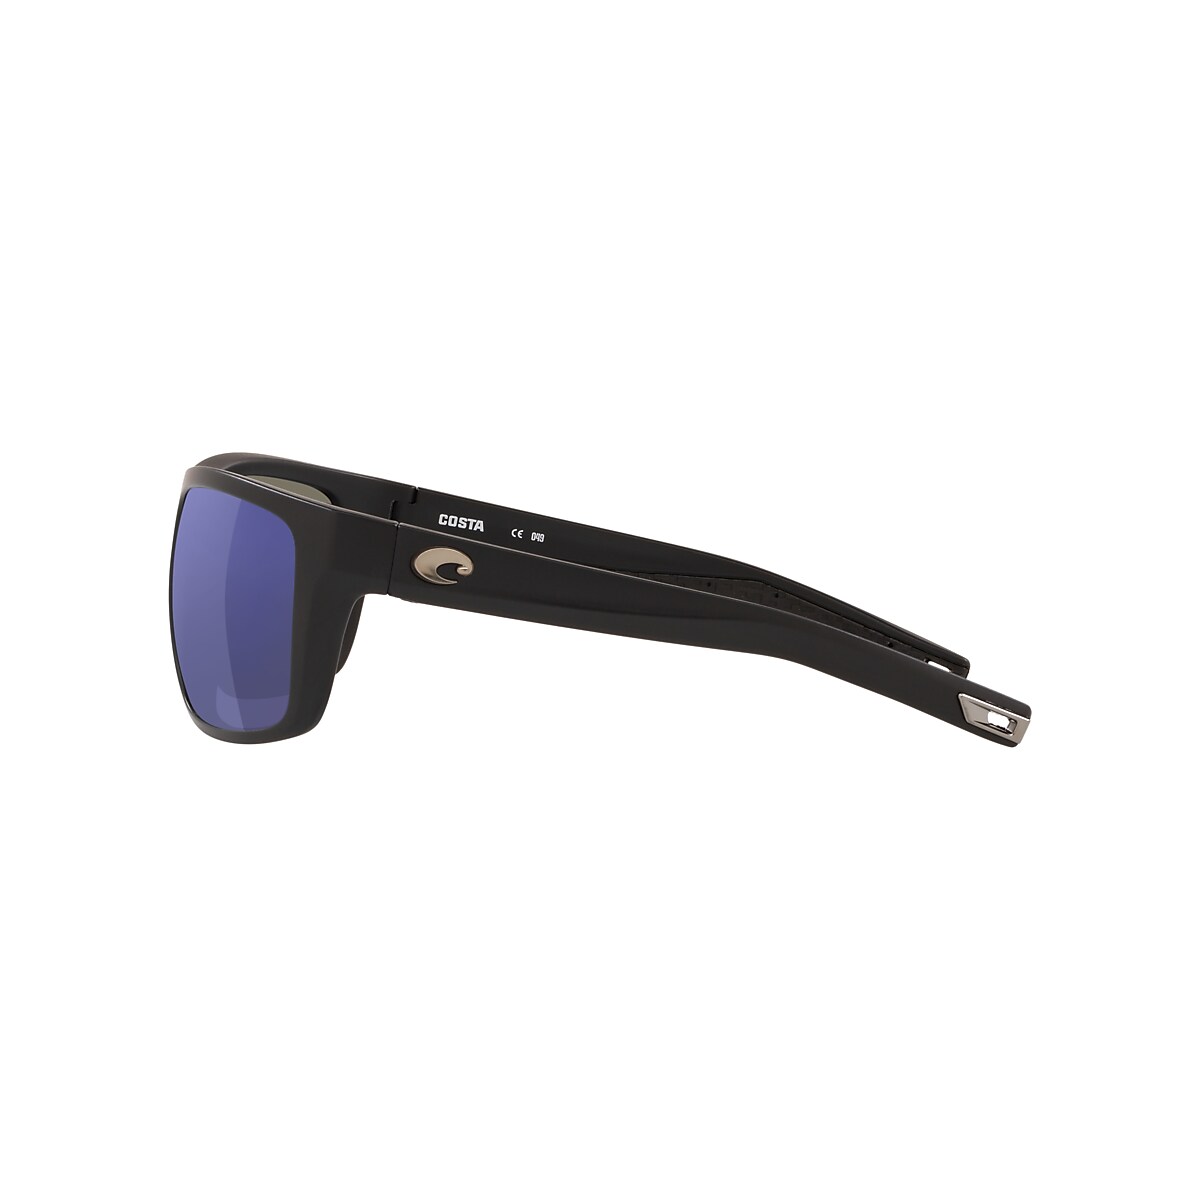 Flatbill Blue Moonshot Polarized Sunglasses